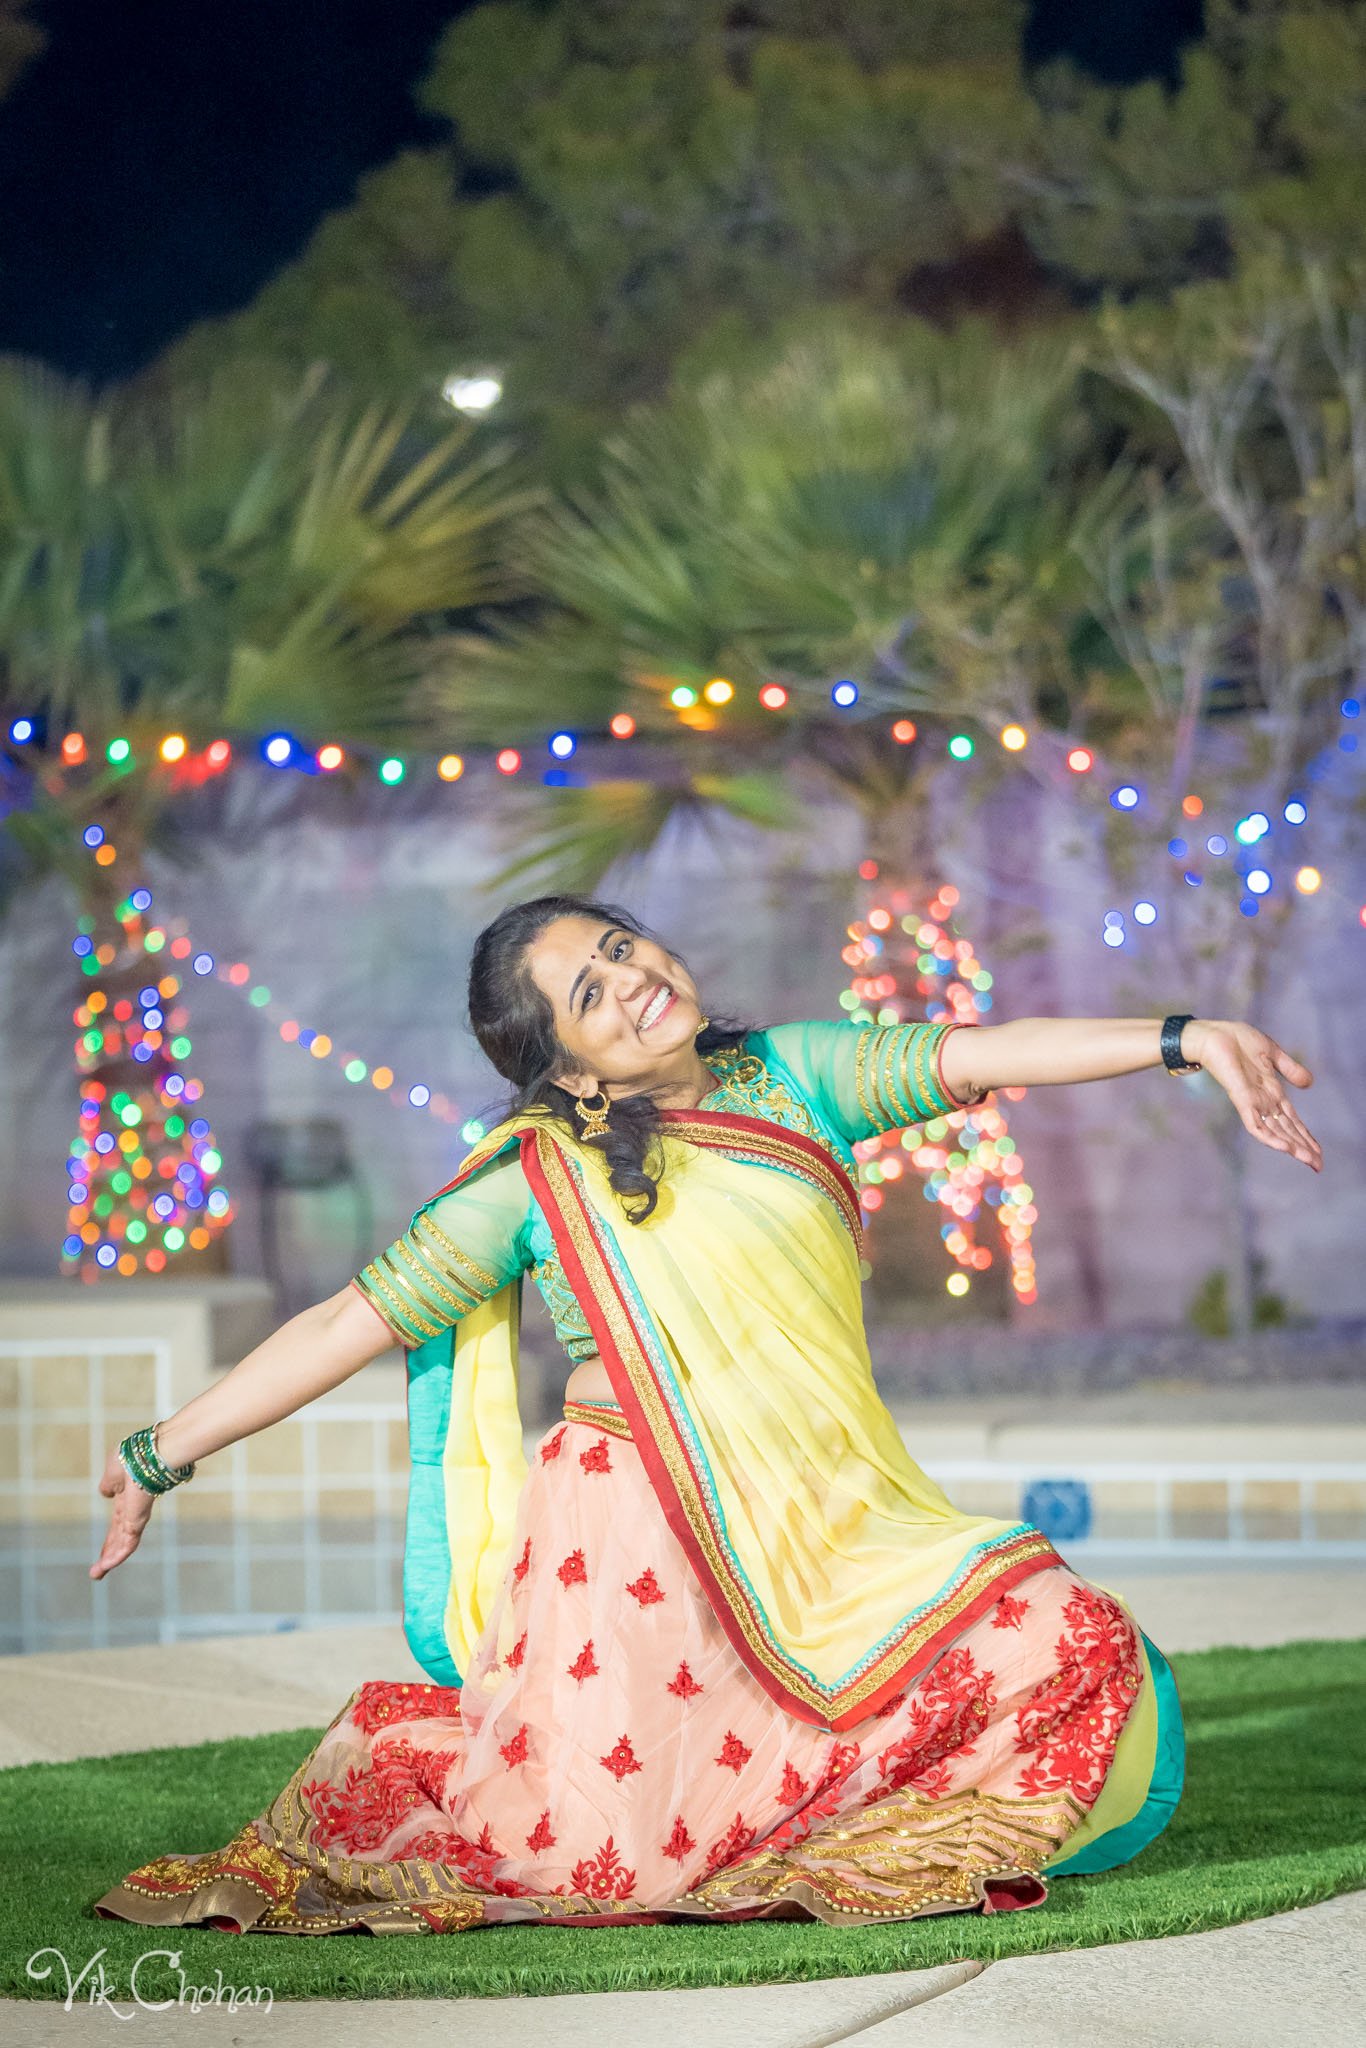 2022-02-04-Hely-&-Parth-Garba-Night-Indian-Wedding-Vik-Chohan-Photography-Photo-Booth-Social-Media-VCP-234.jpg